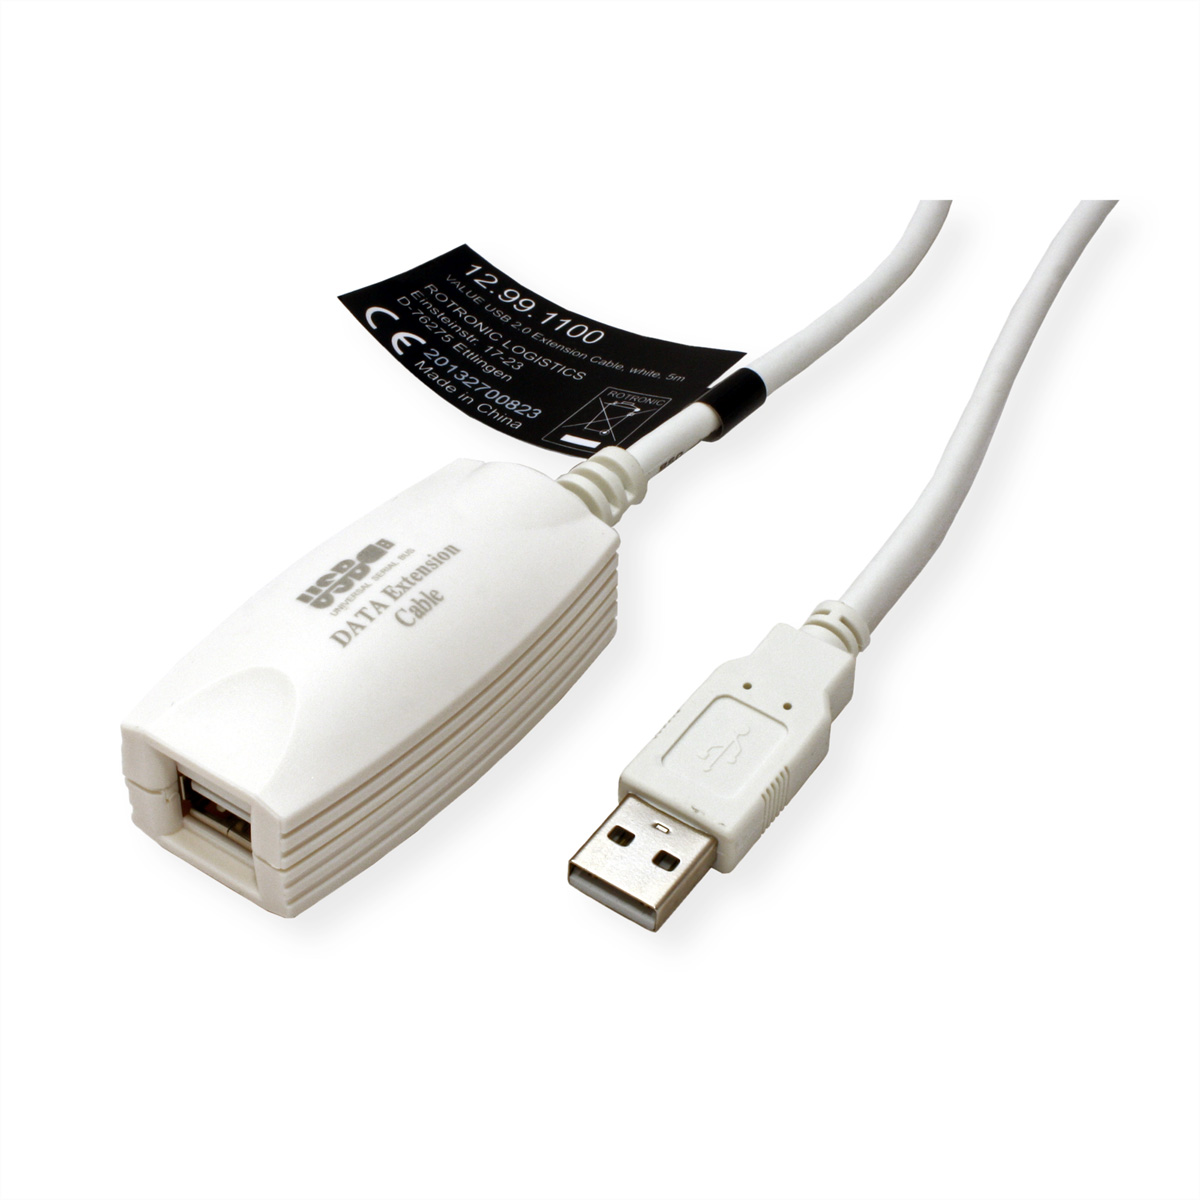 VALUE 2.0 2.0 Verlängerungskabel USB Verlängerung USB